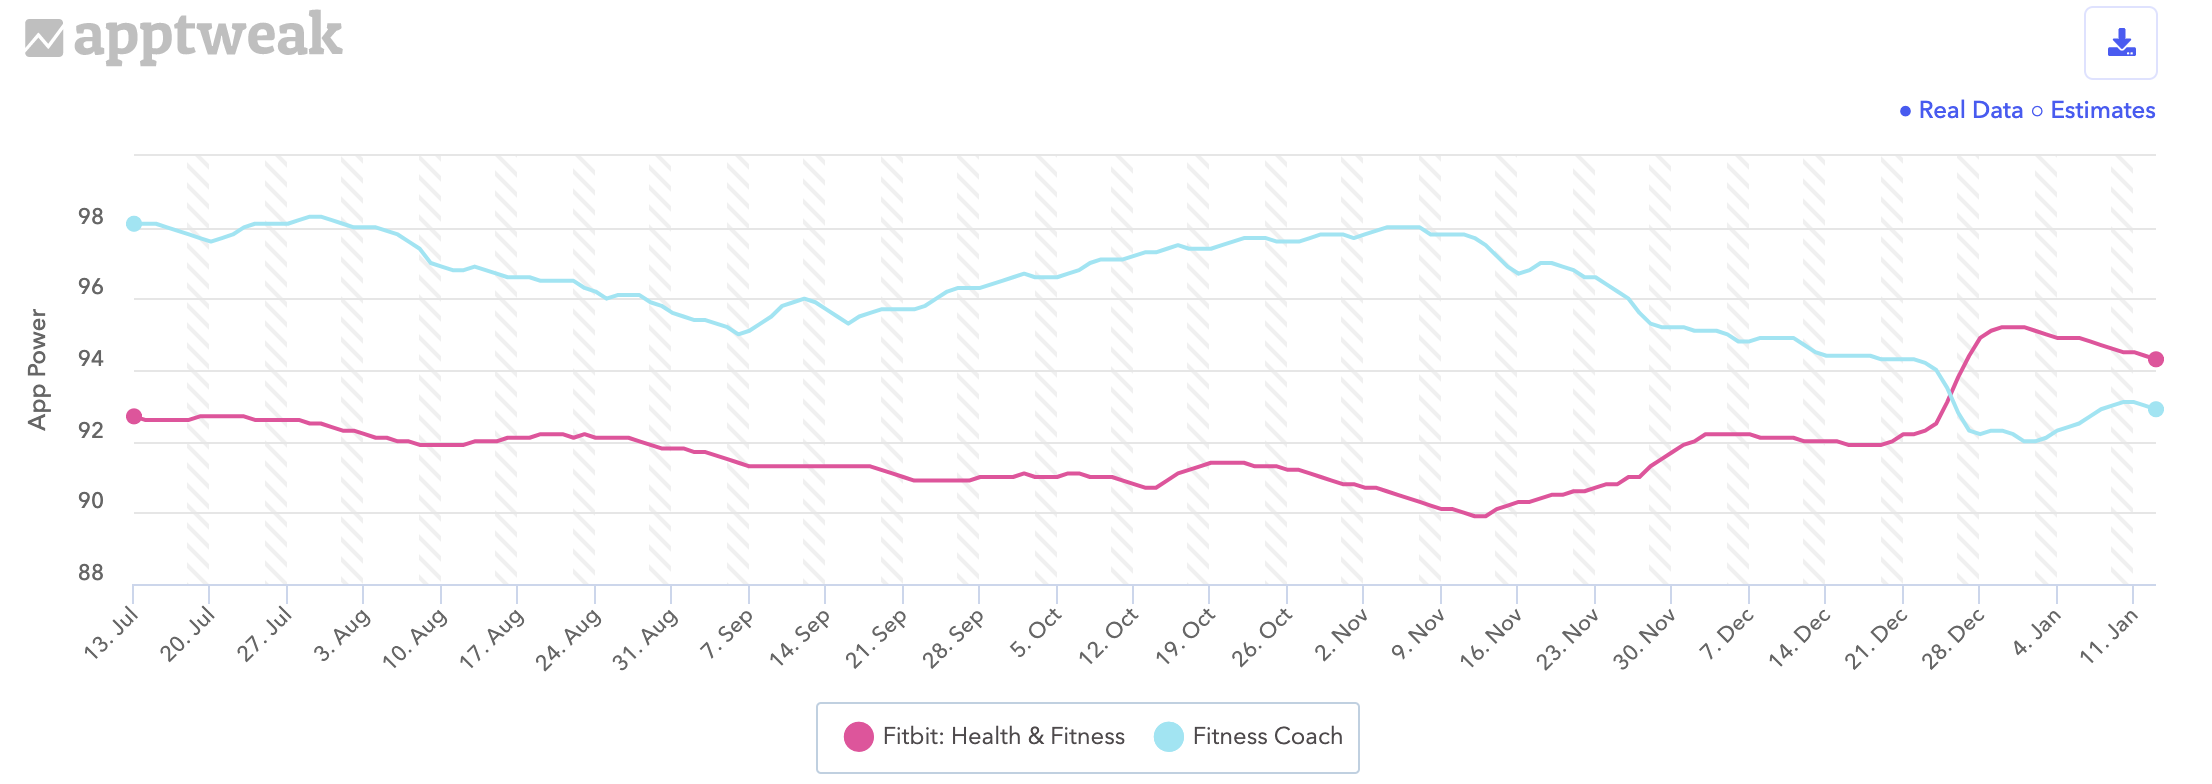 app power fitbit vs fitness coach